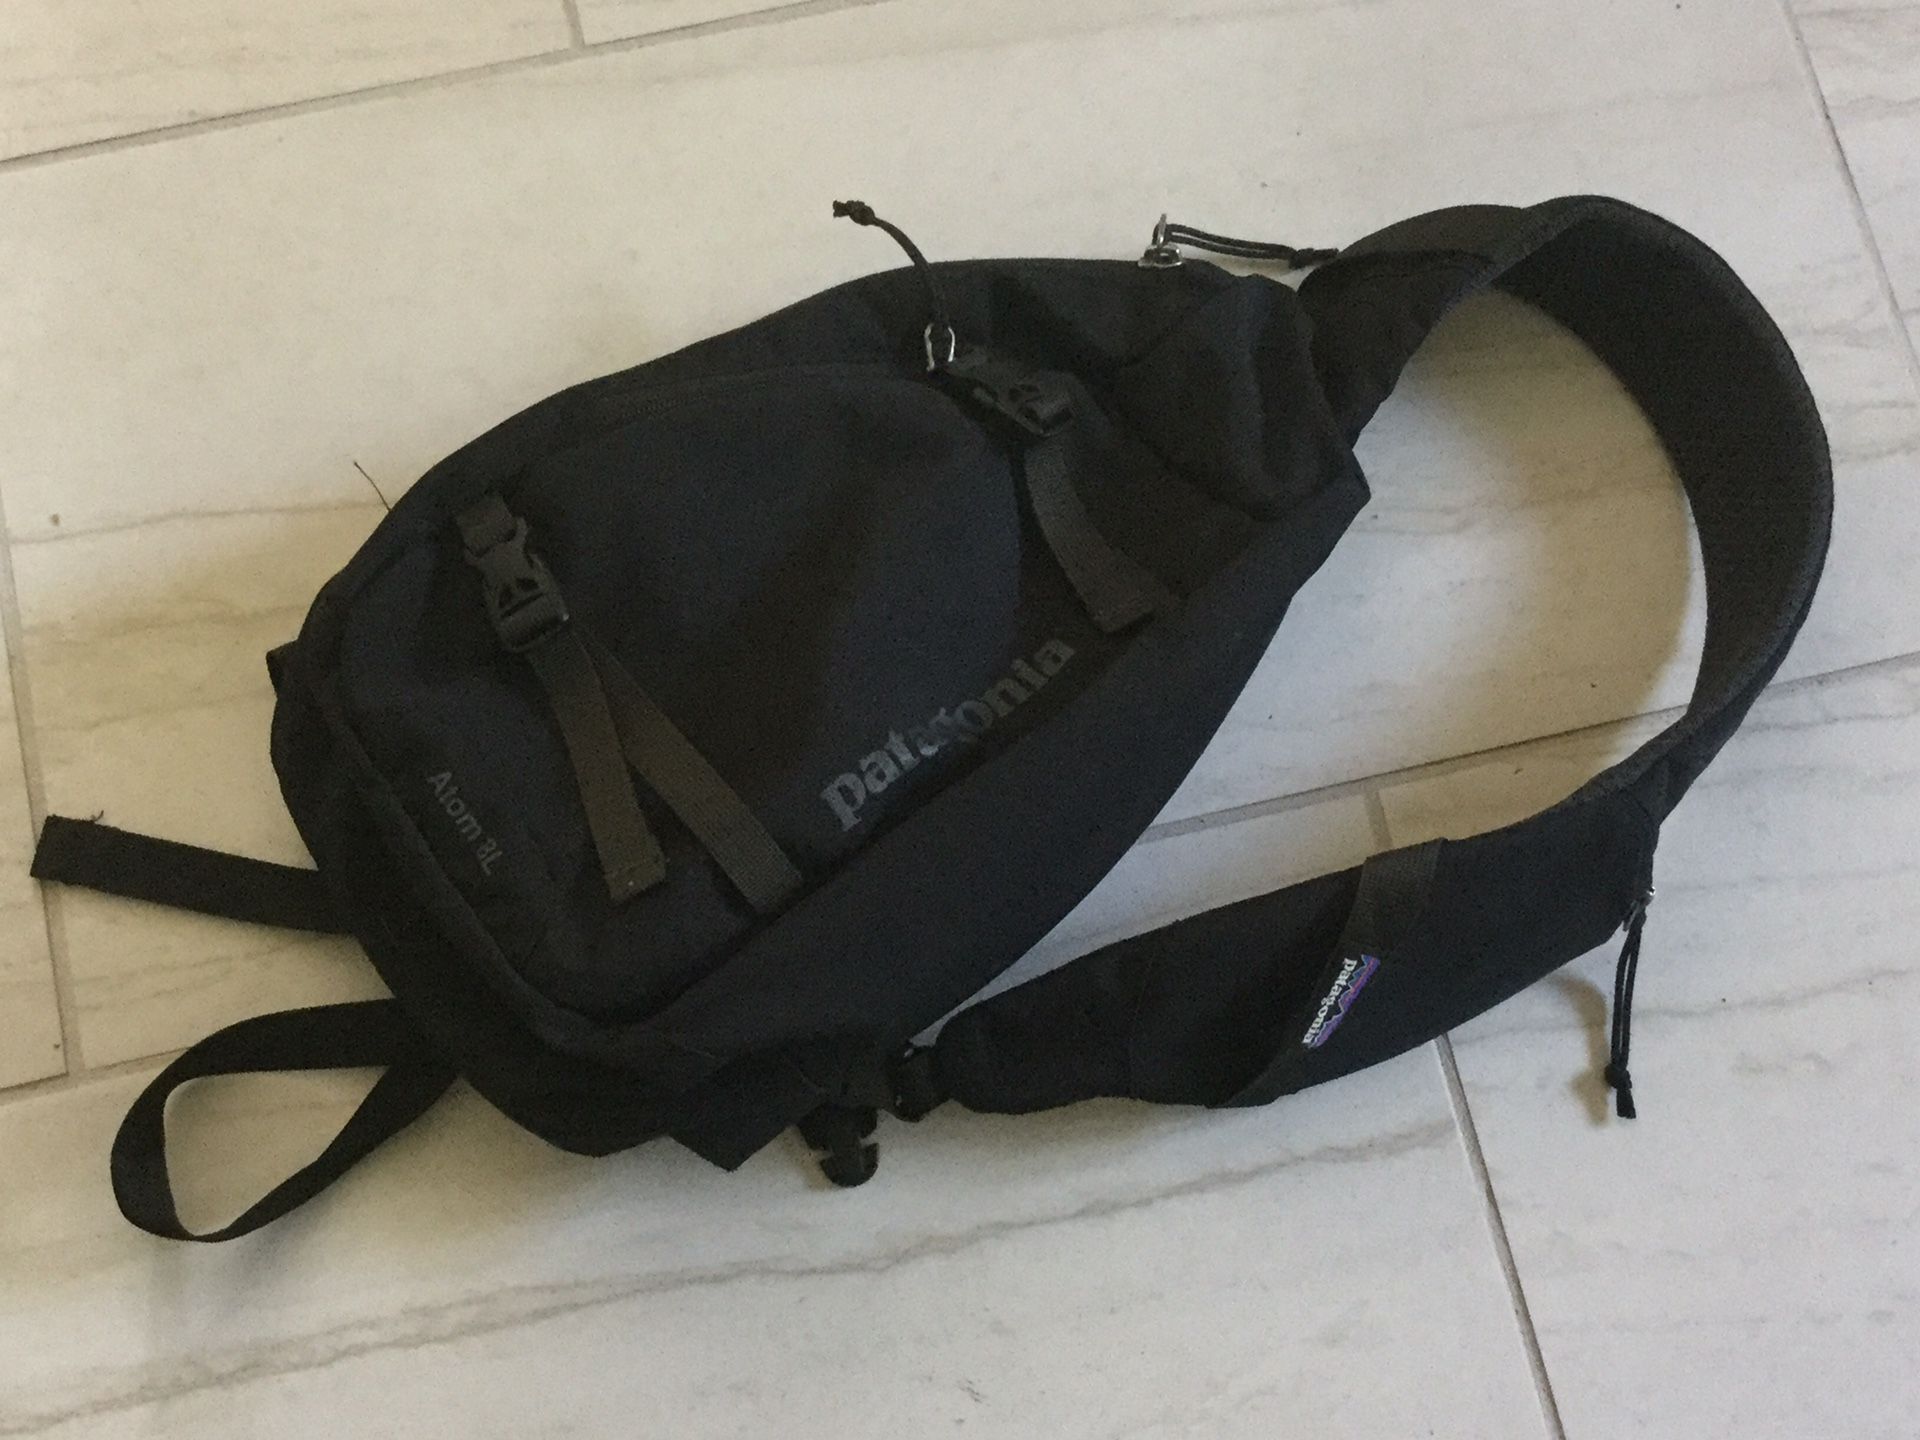 New Patagonia sling backpack Black nylon purse